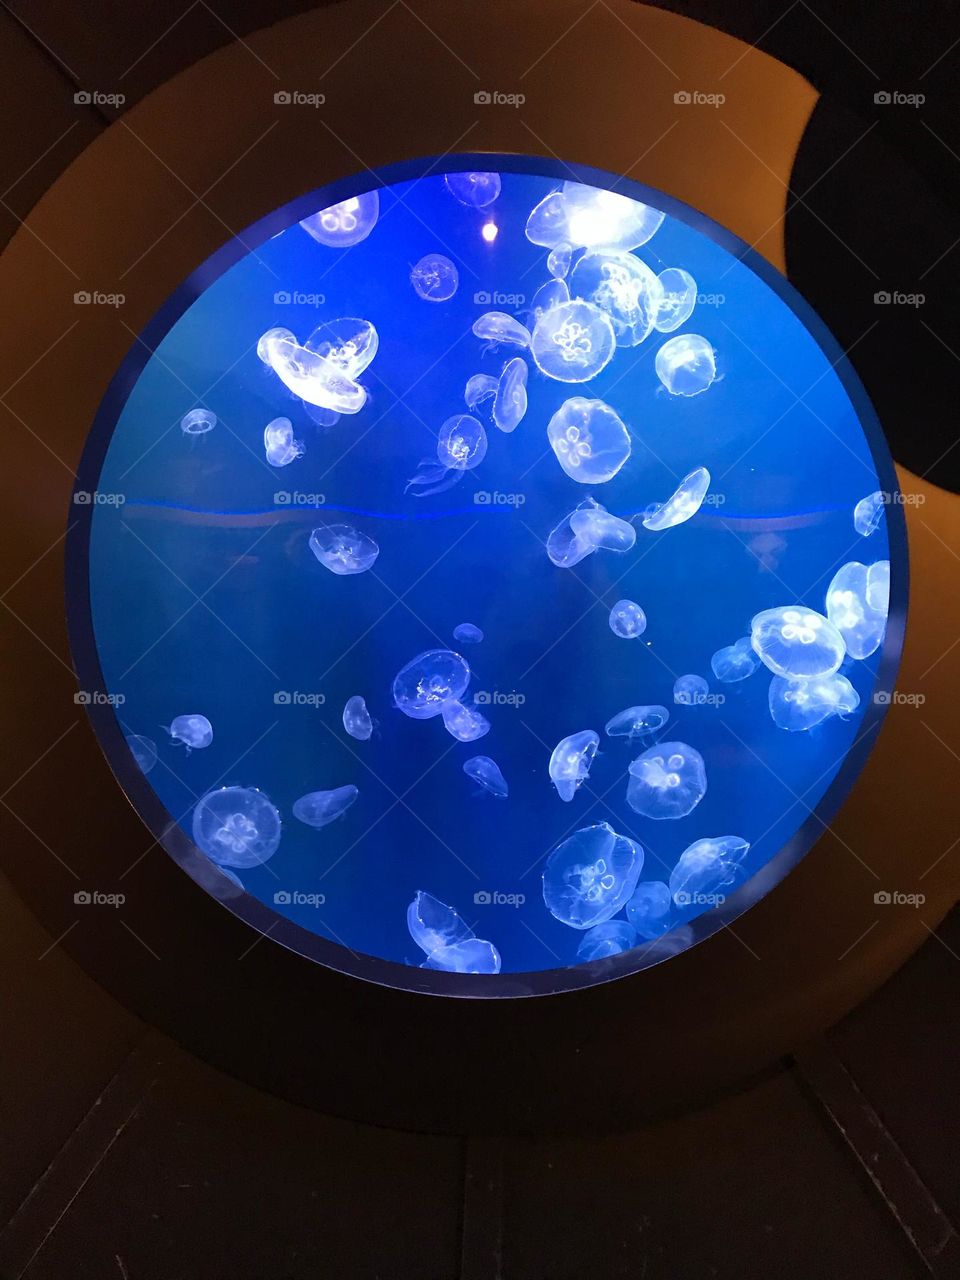 Jellyfish portal